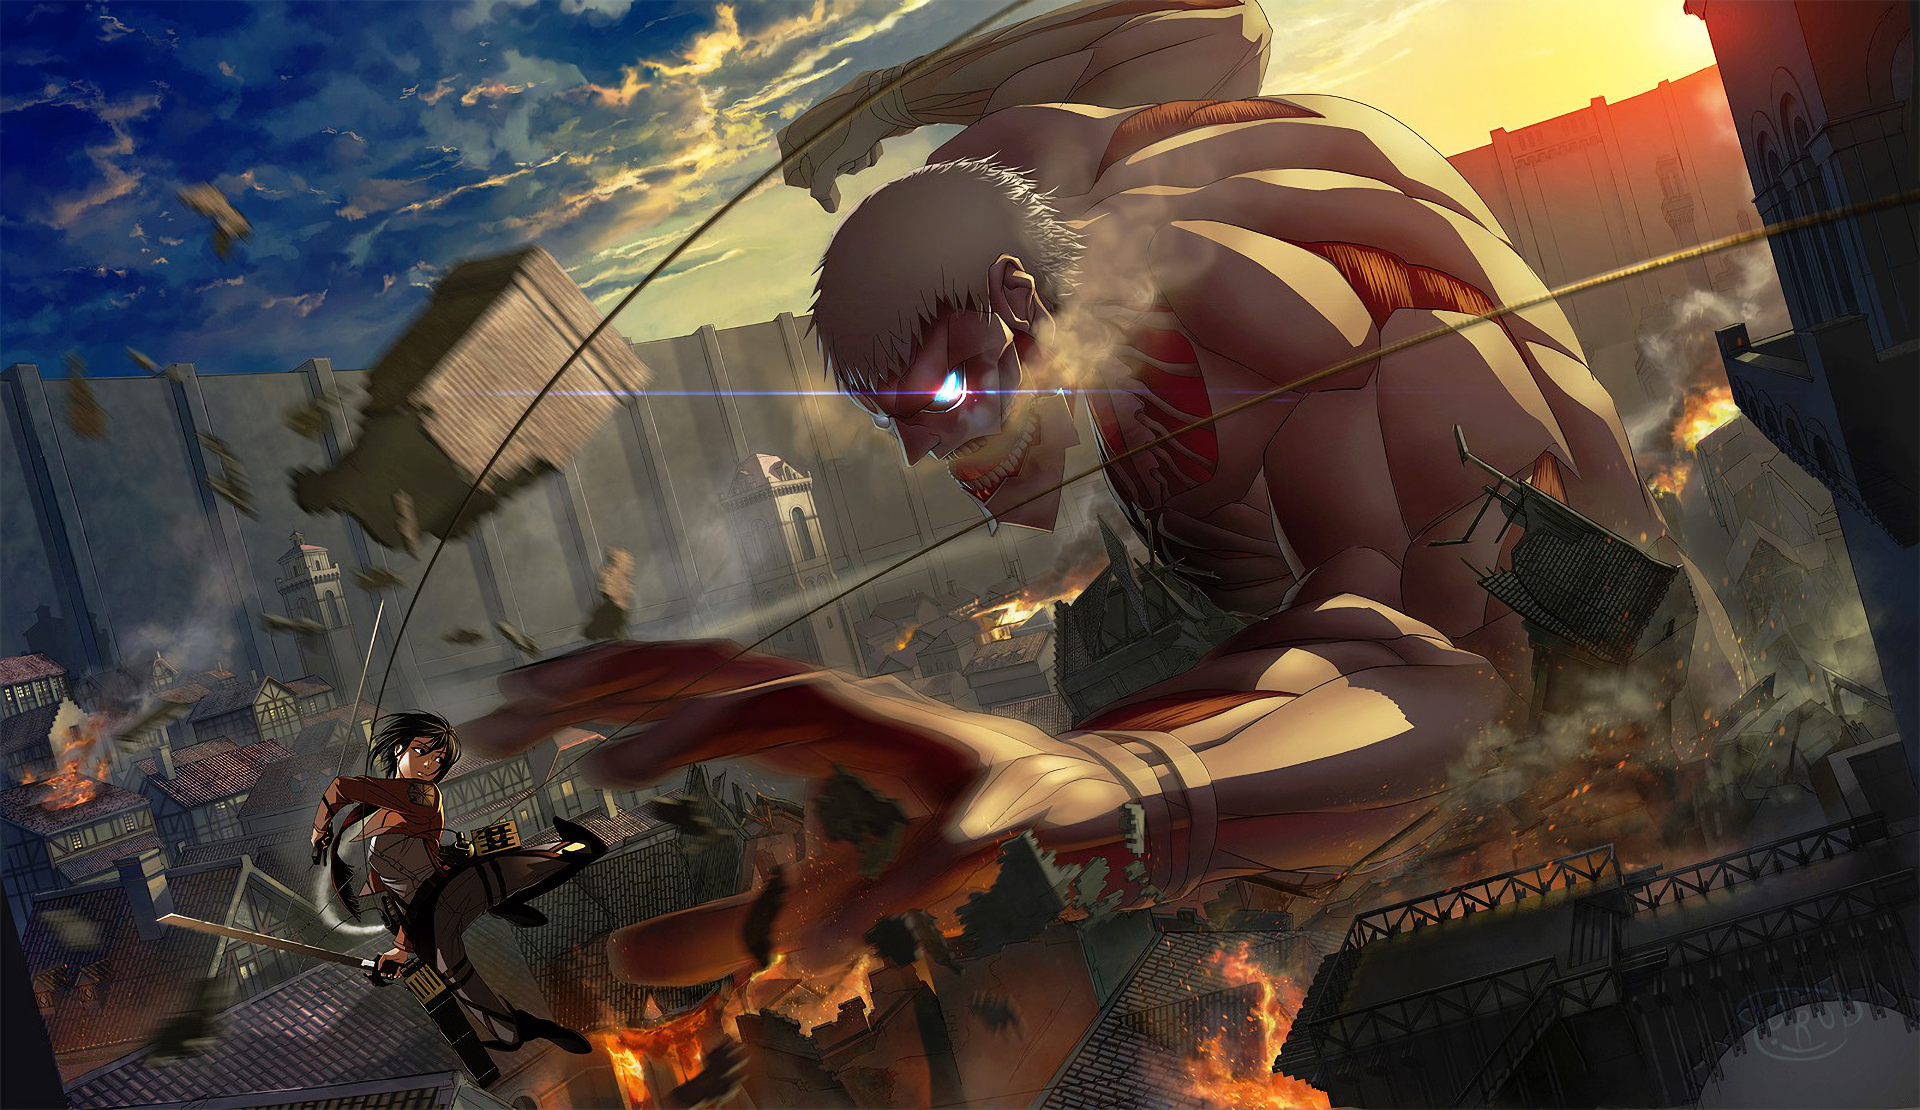 Mikasa Fighting With Armored Titan by goruditai